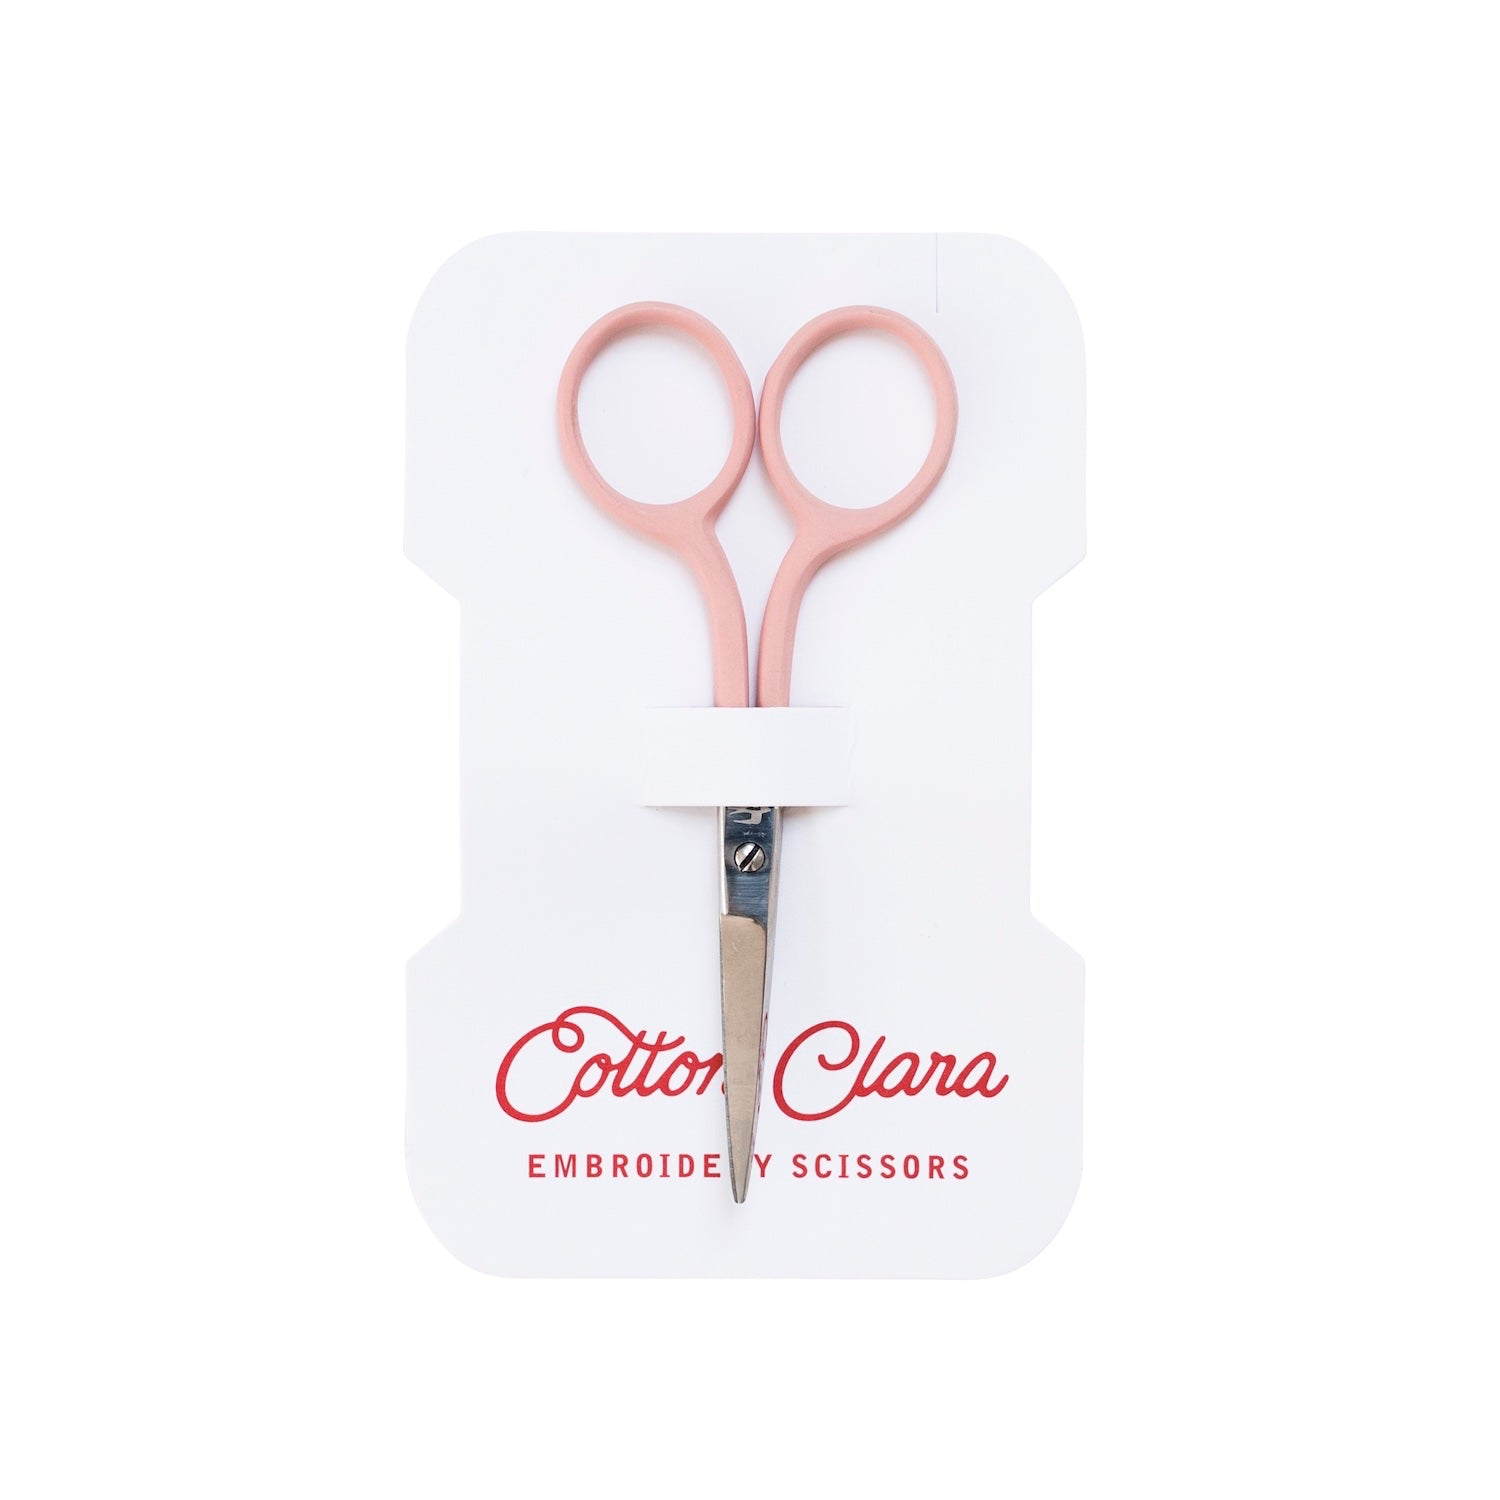 Cotton Clara Cotton Clara - Embroidery Scissors, Blush Pink